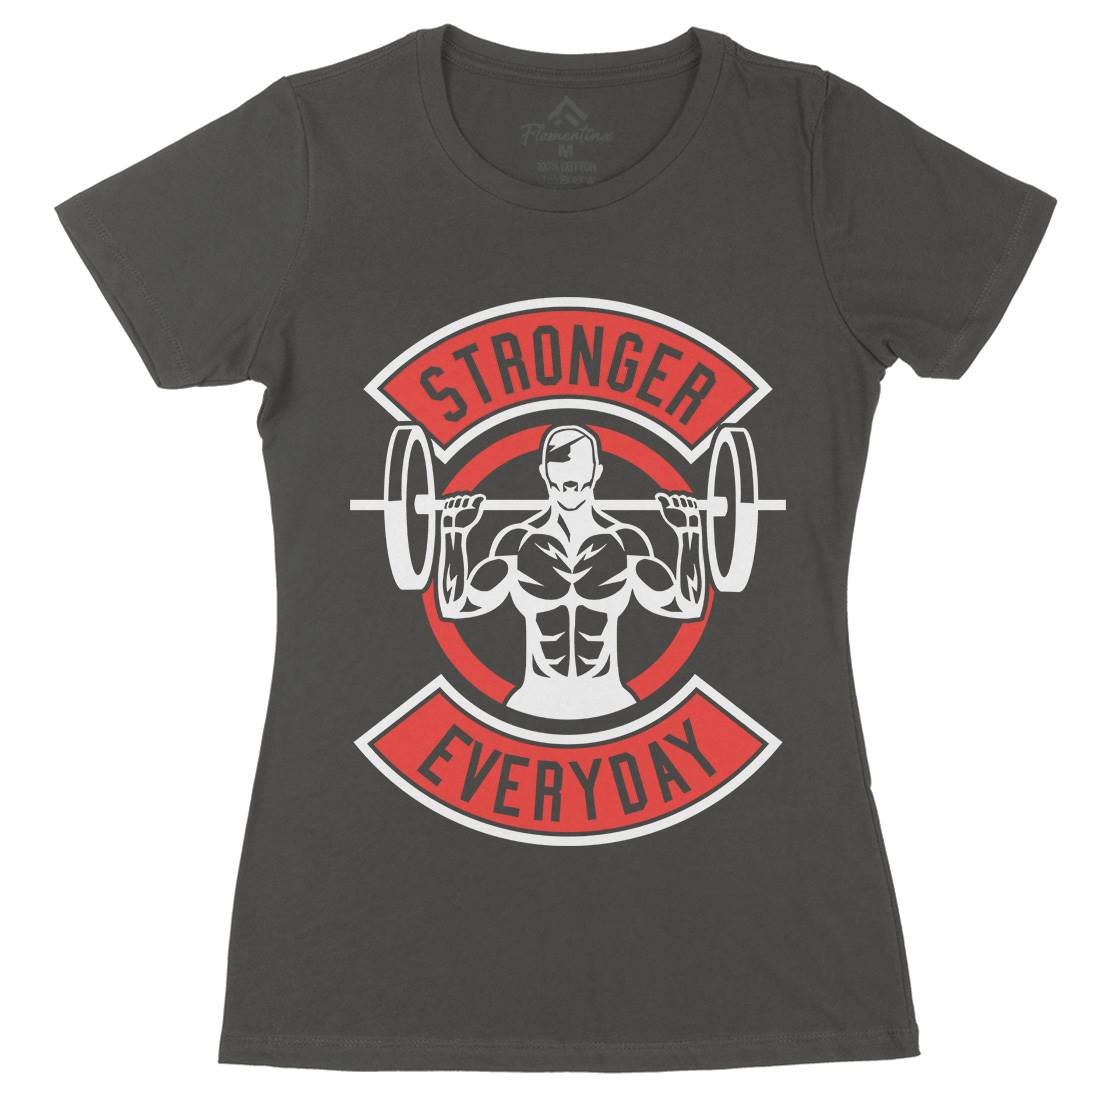 Stronger Everyday Womens Organic Crew Neck T-Shirt Gym A289